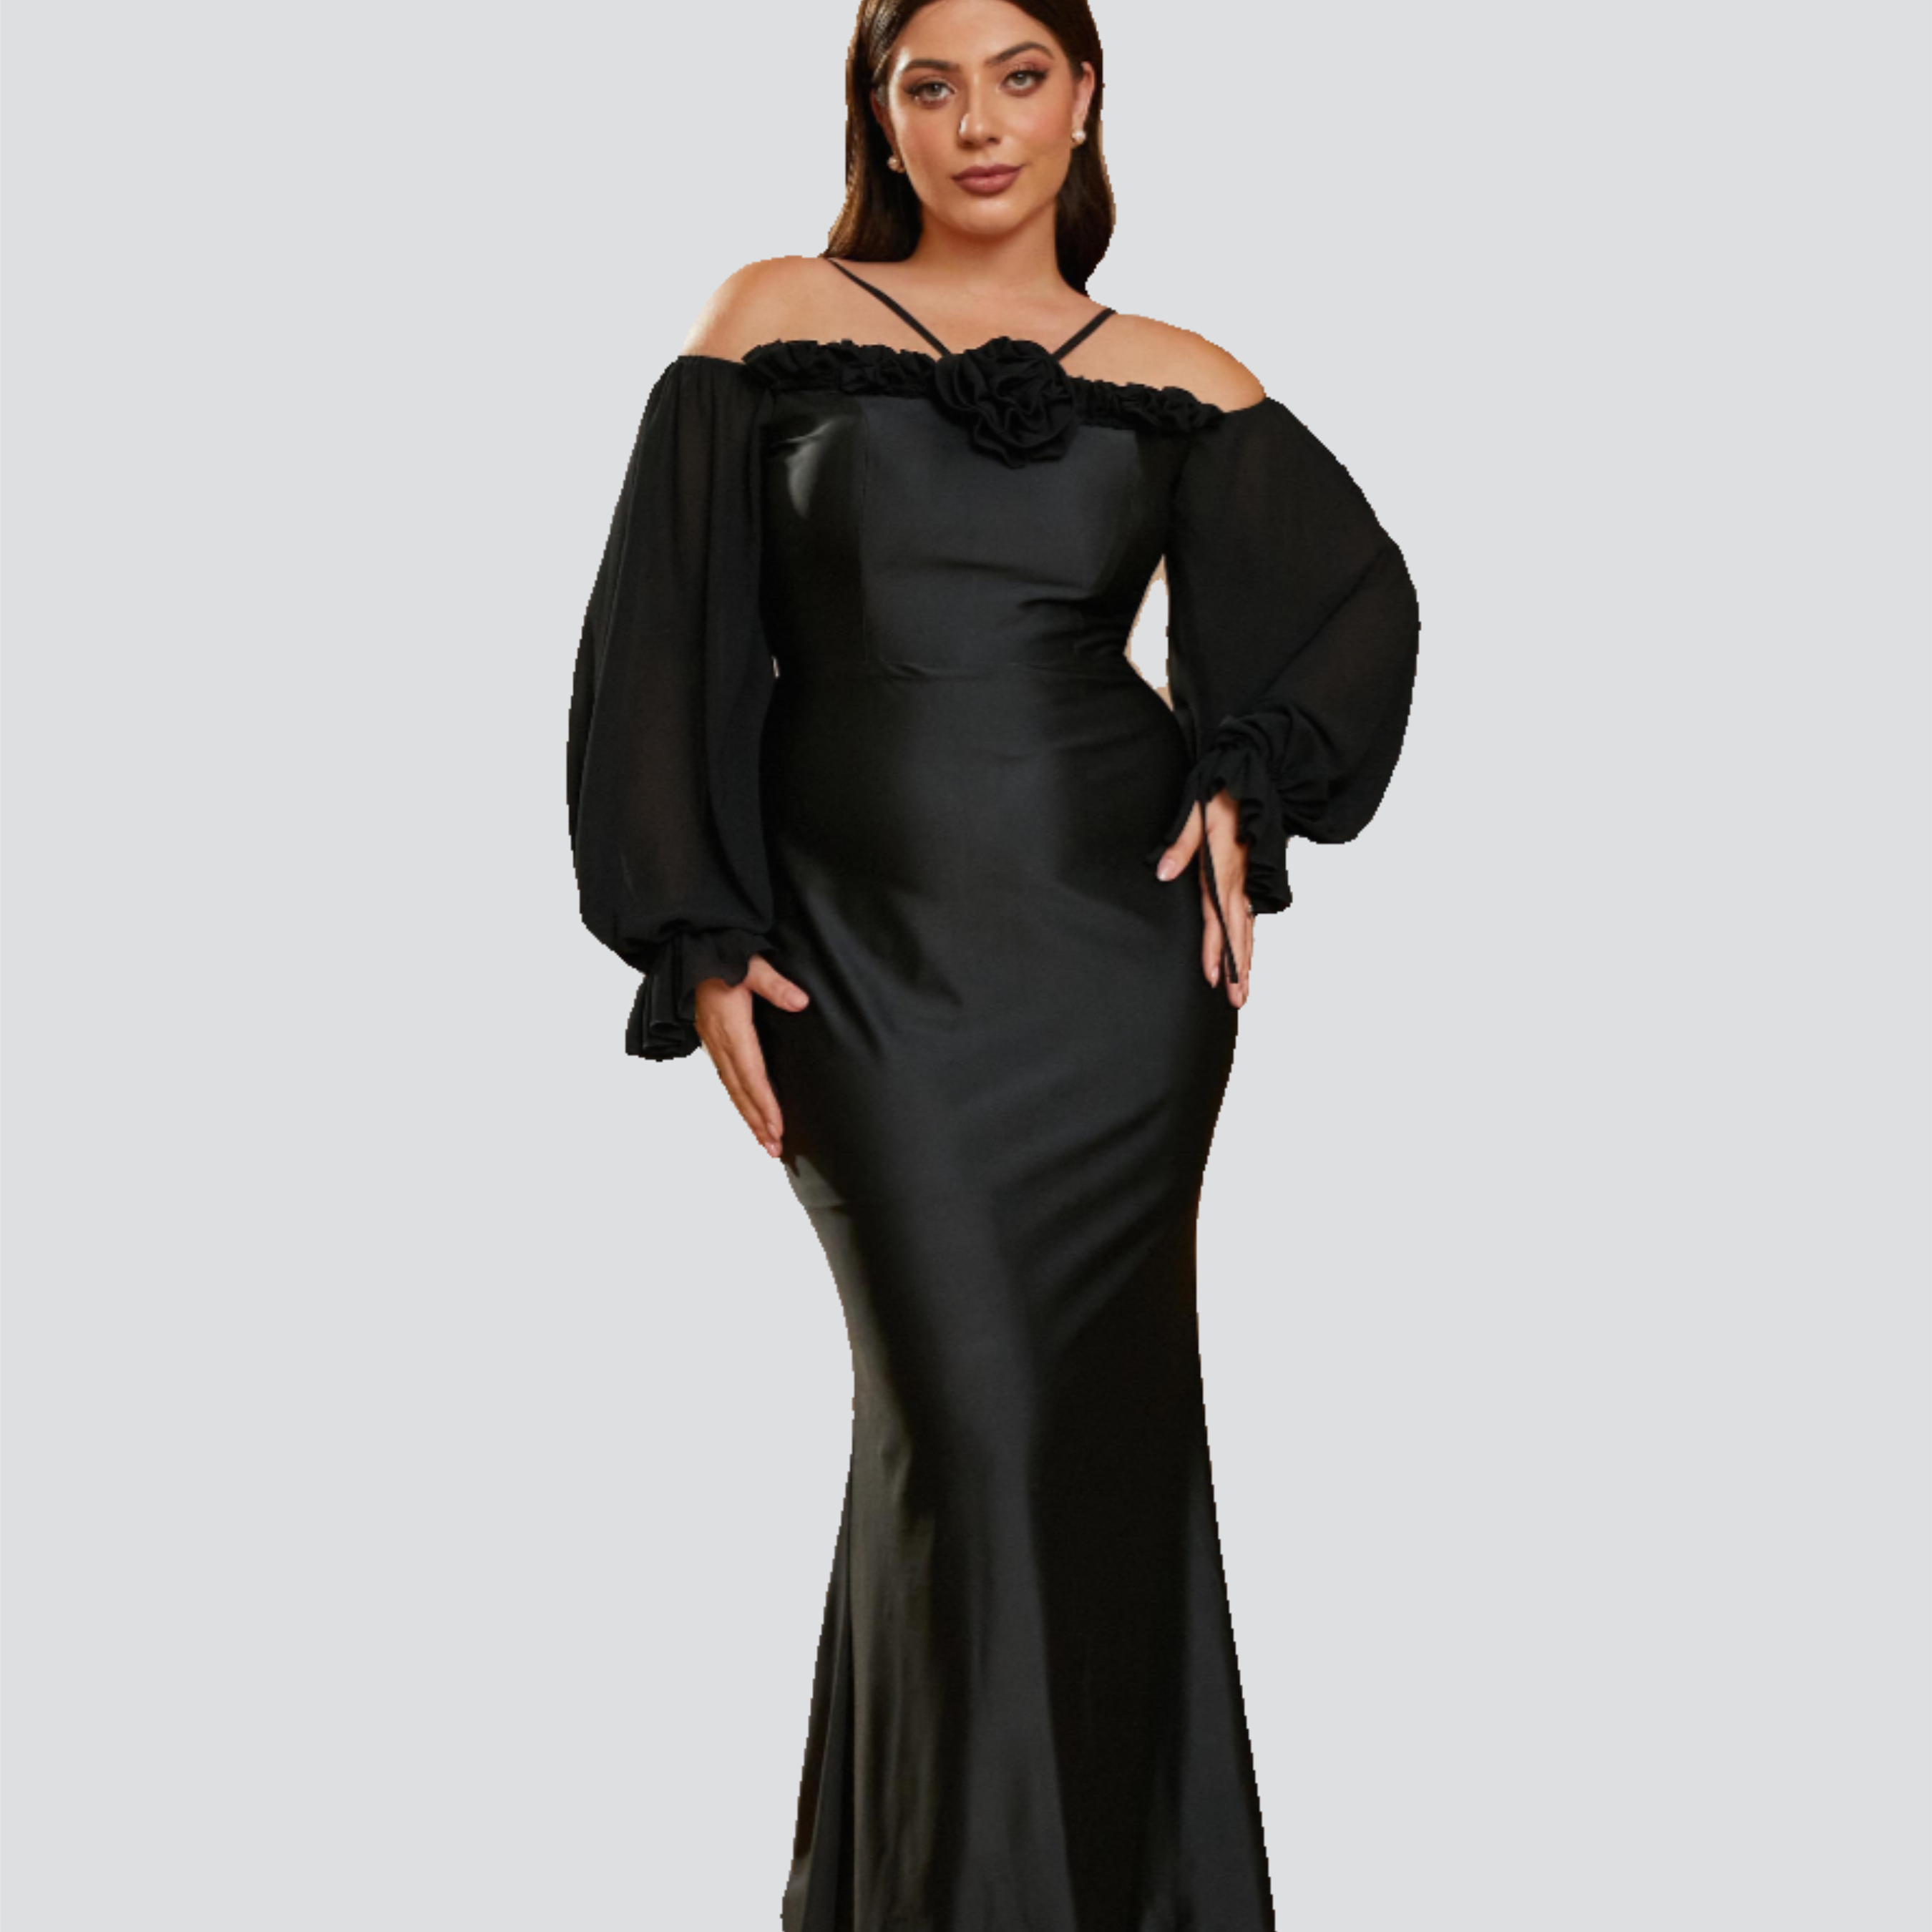 Plus Size Halter Appliqued Panel Black Prom Dress